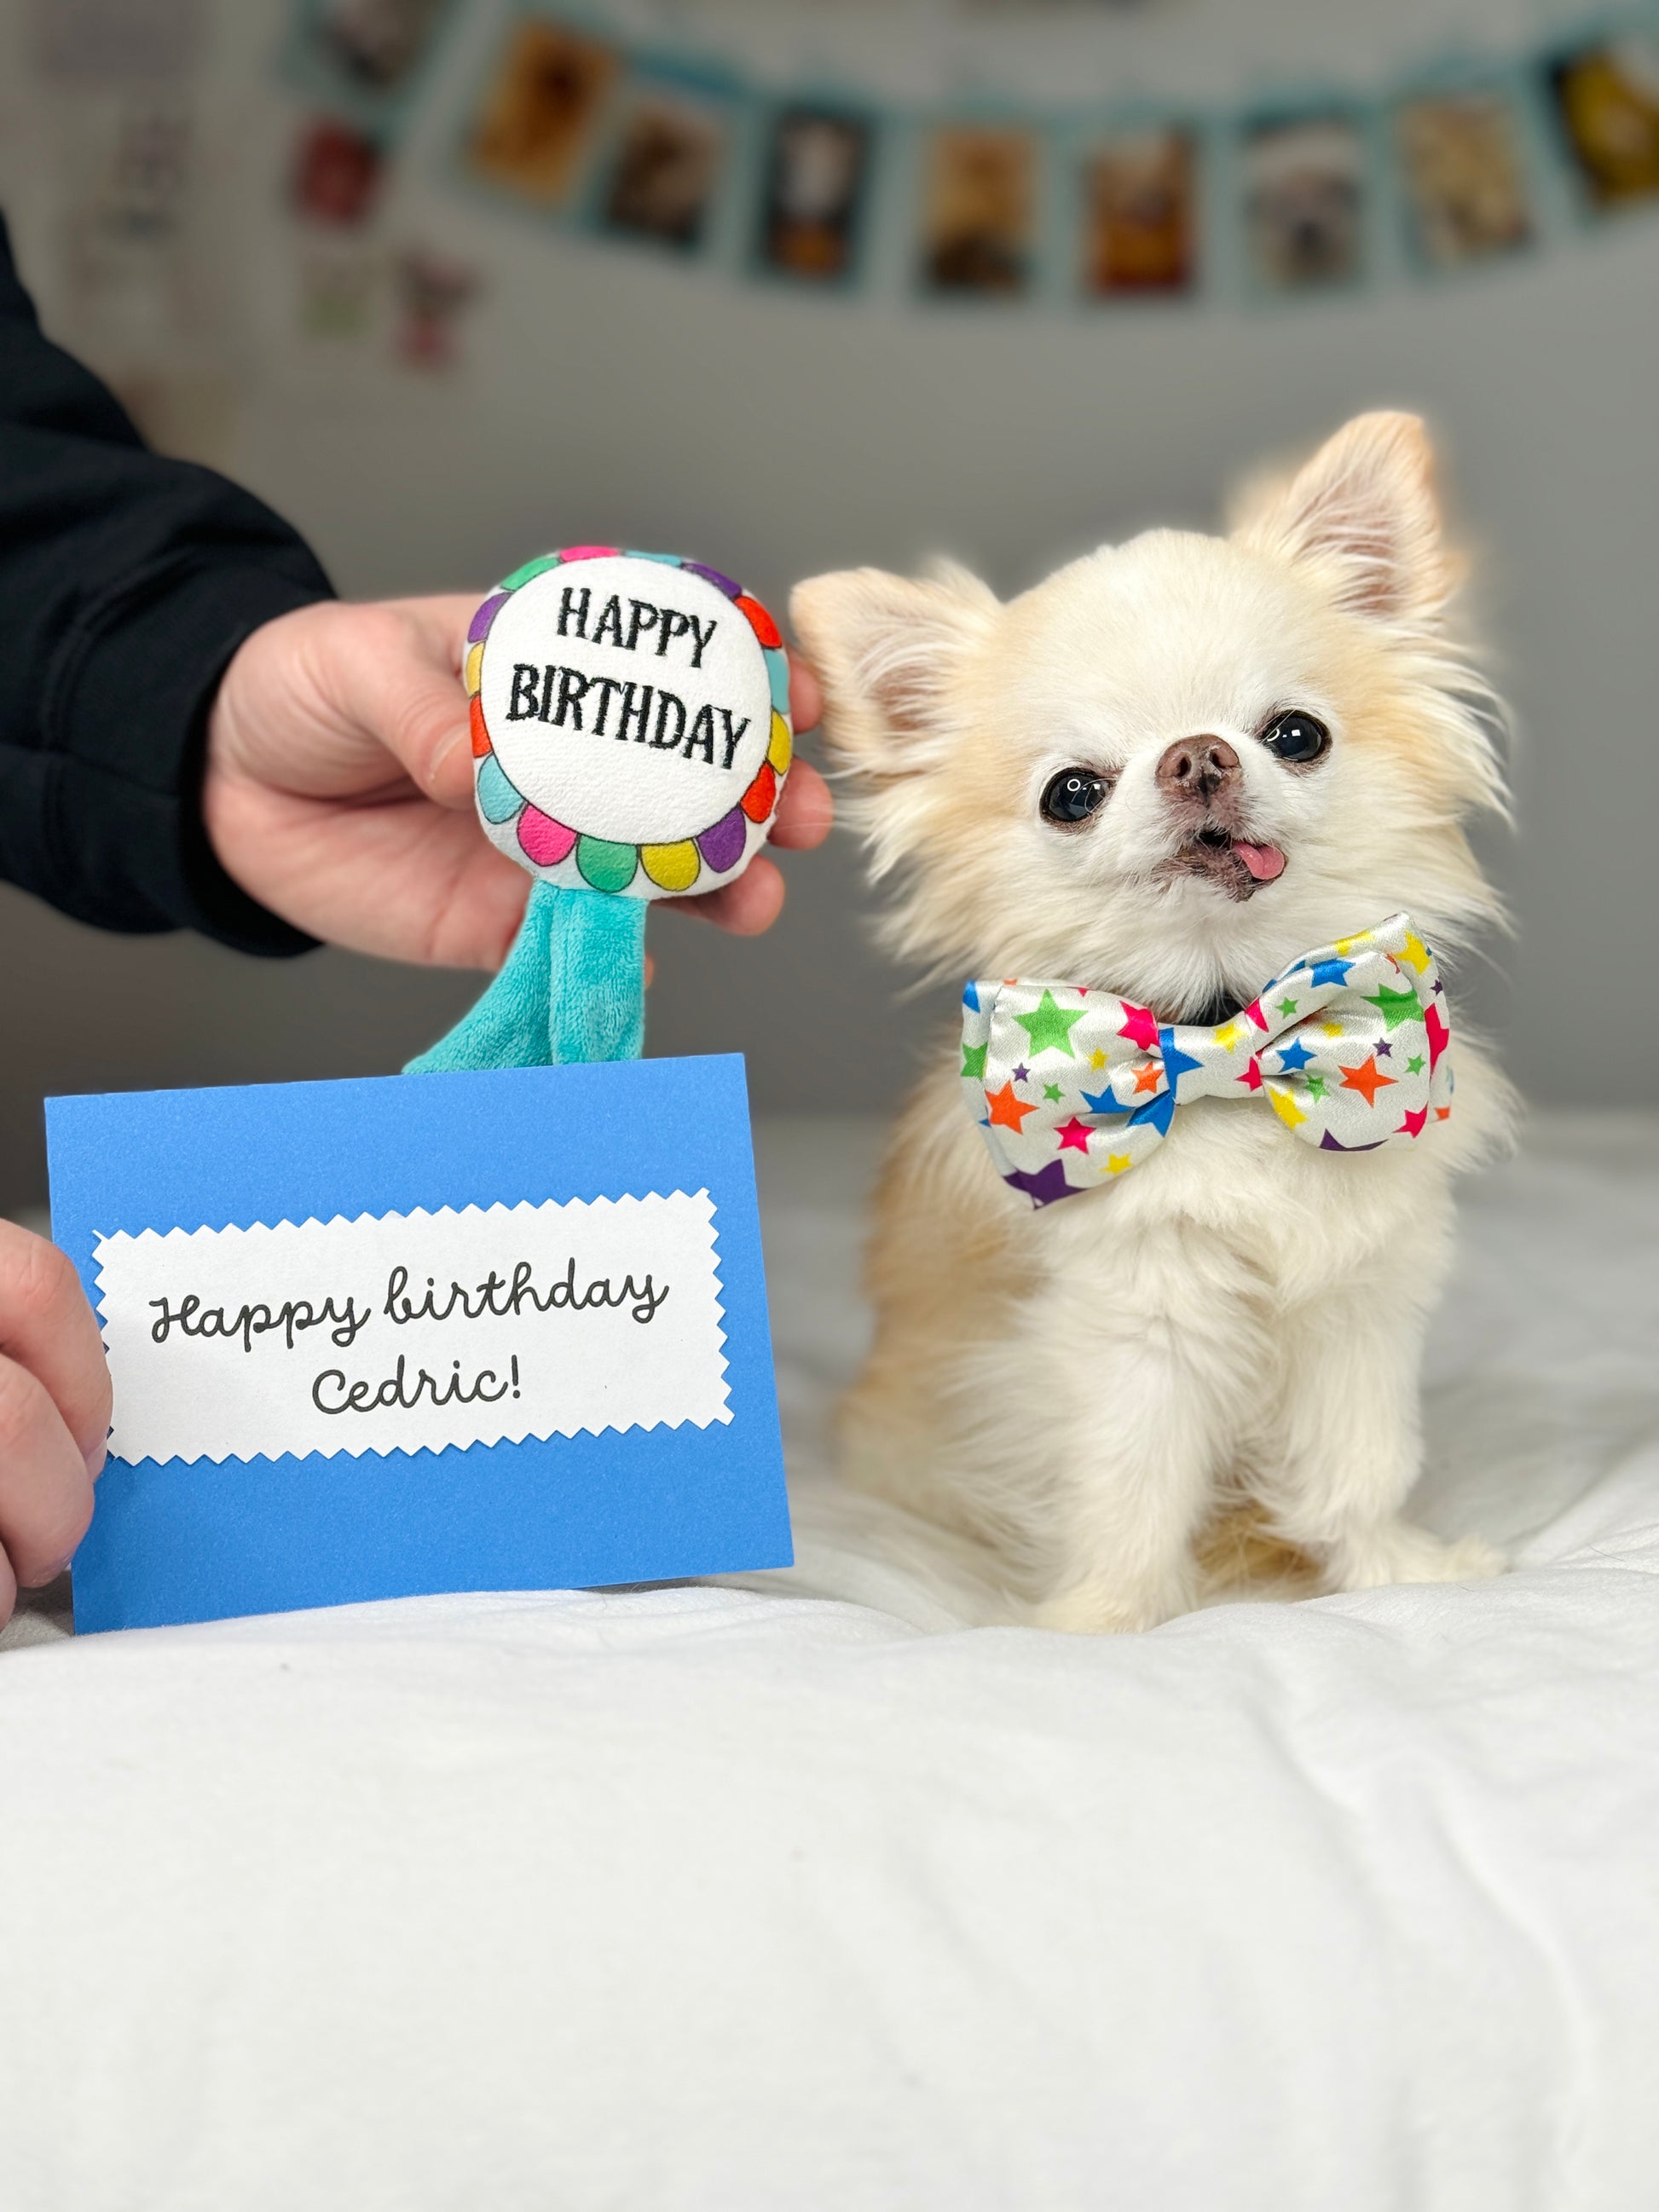 Tiny Chihuahua Cedric Singing Saying Happy Birthday Cedric!